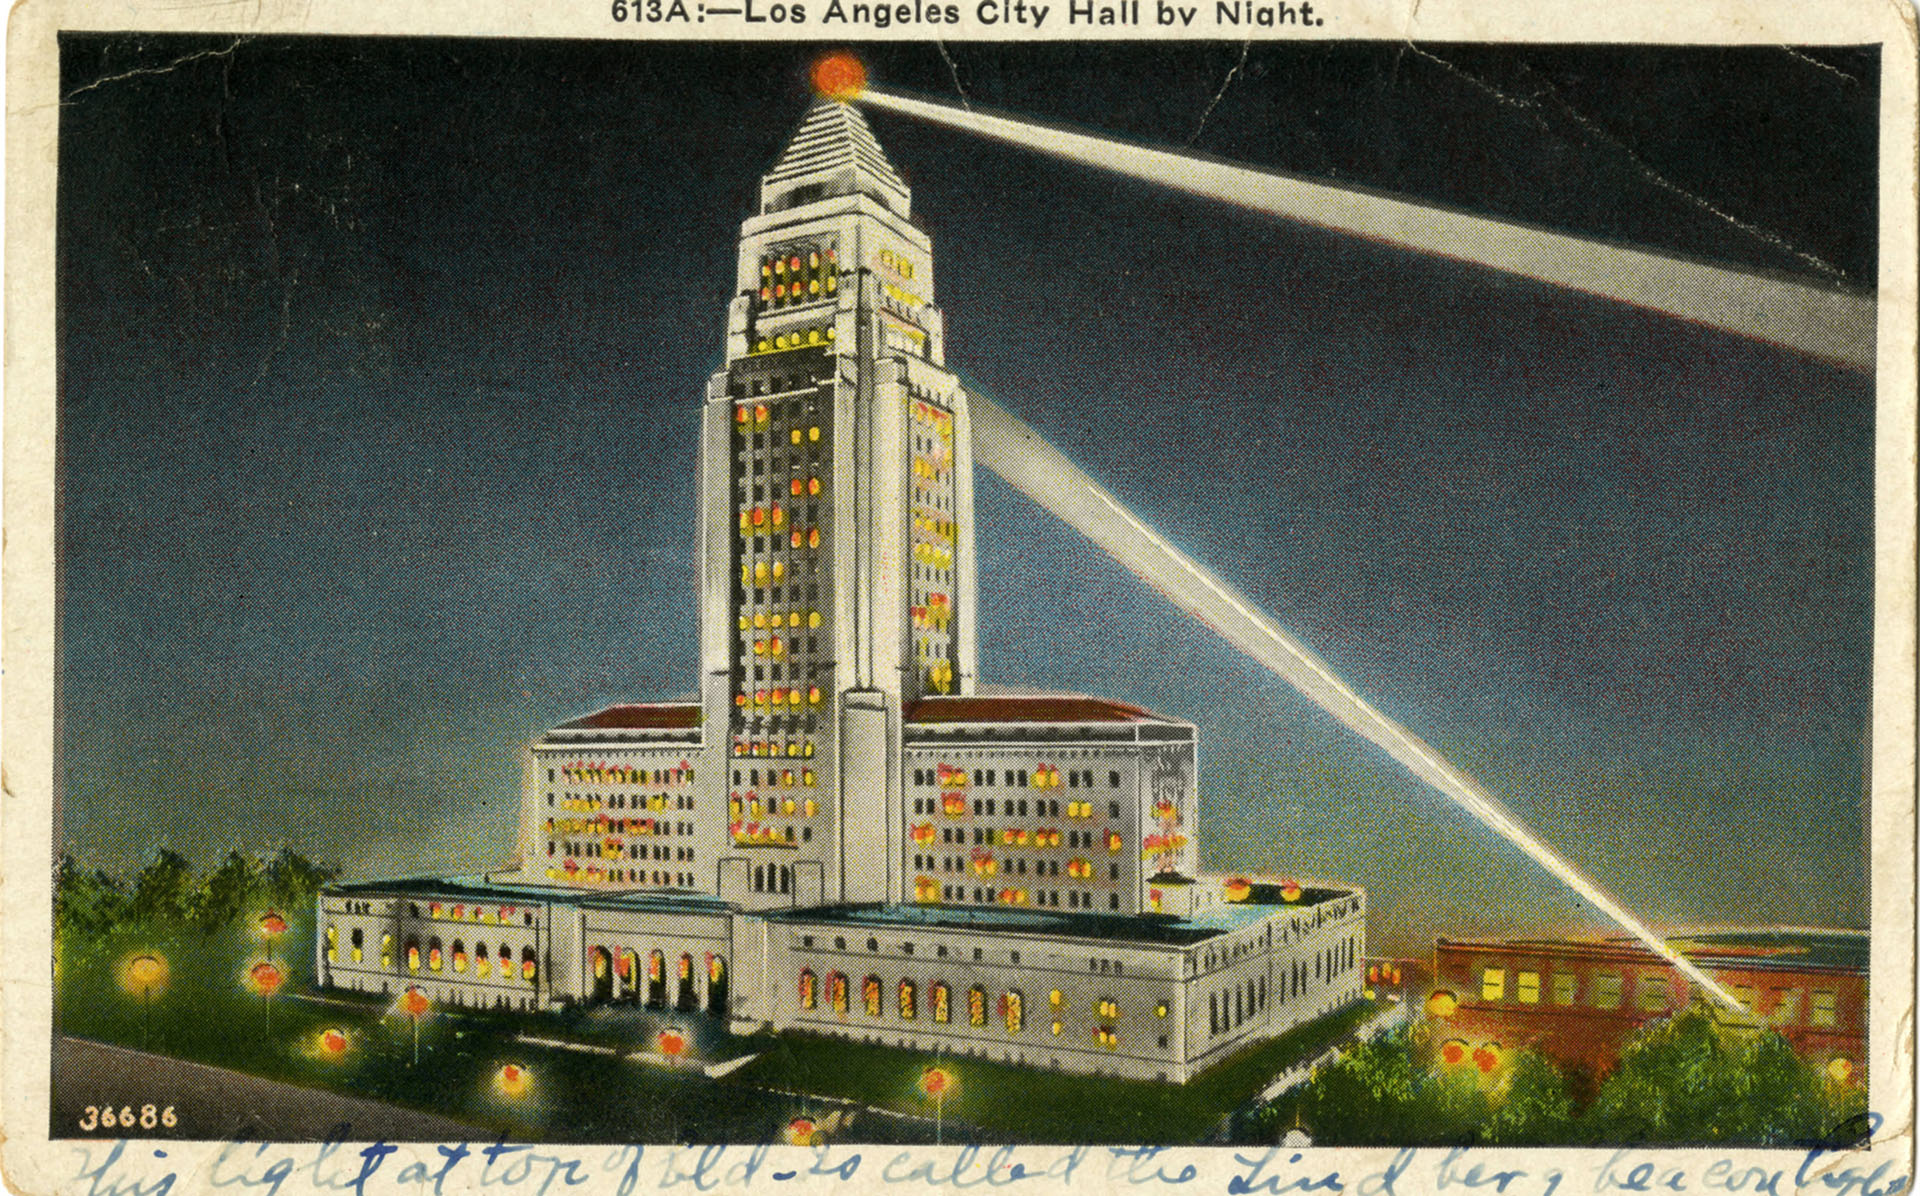 Los Angeles in Buildings: City Hall | KCET